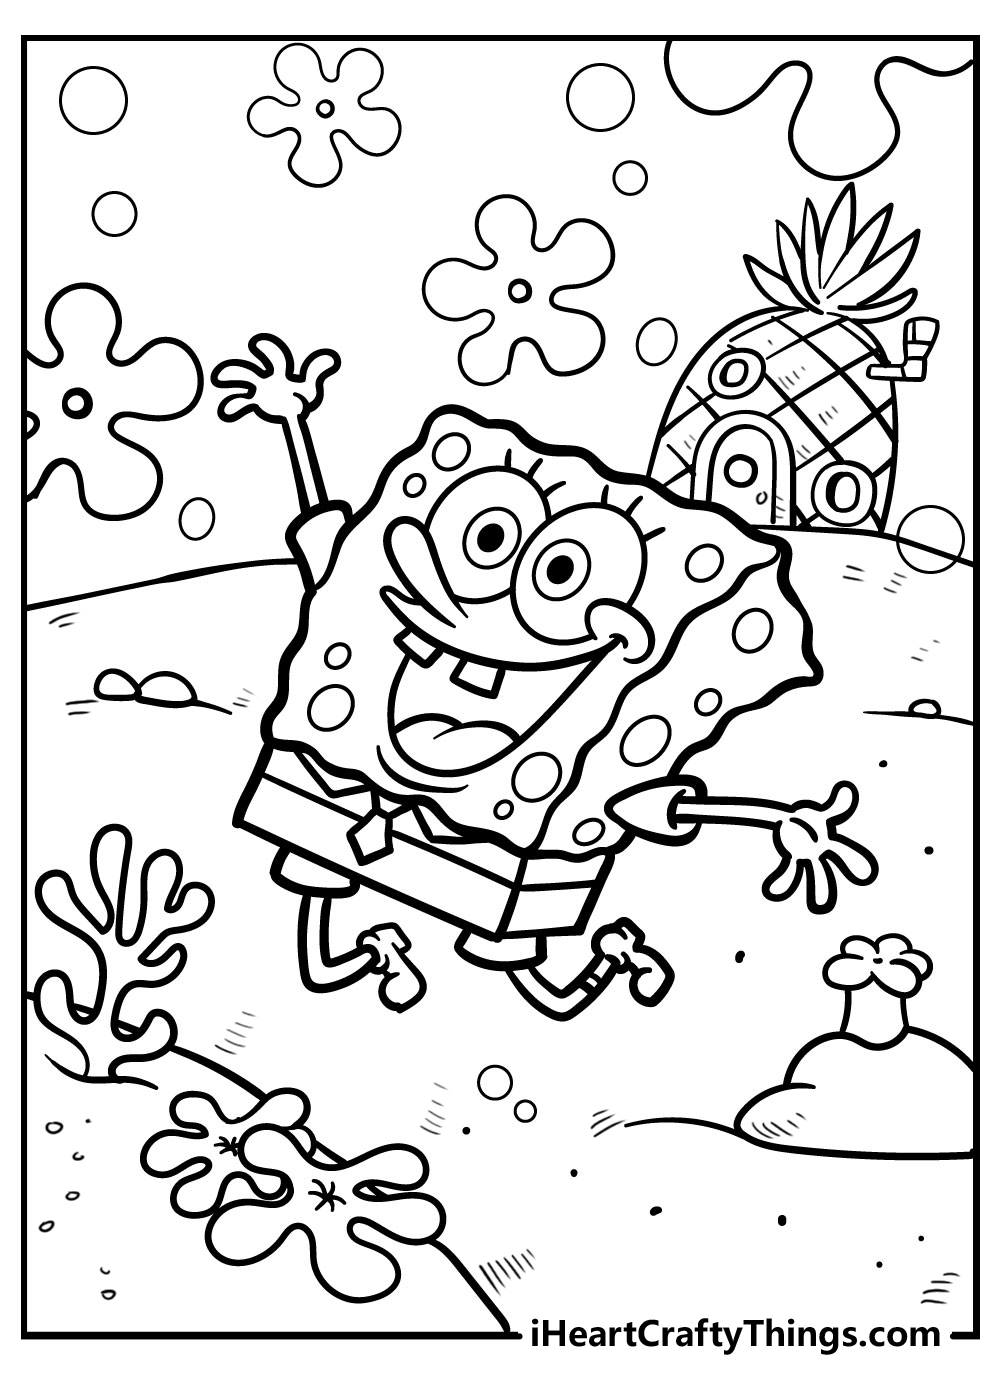 20 Super Fun Spongebob Coloring Pages